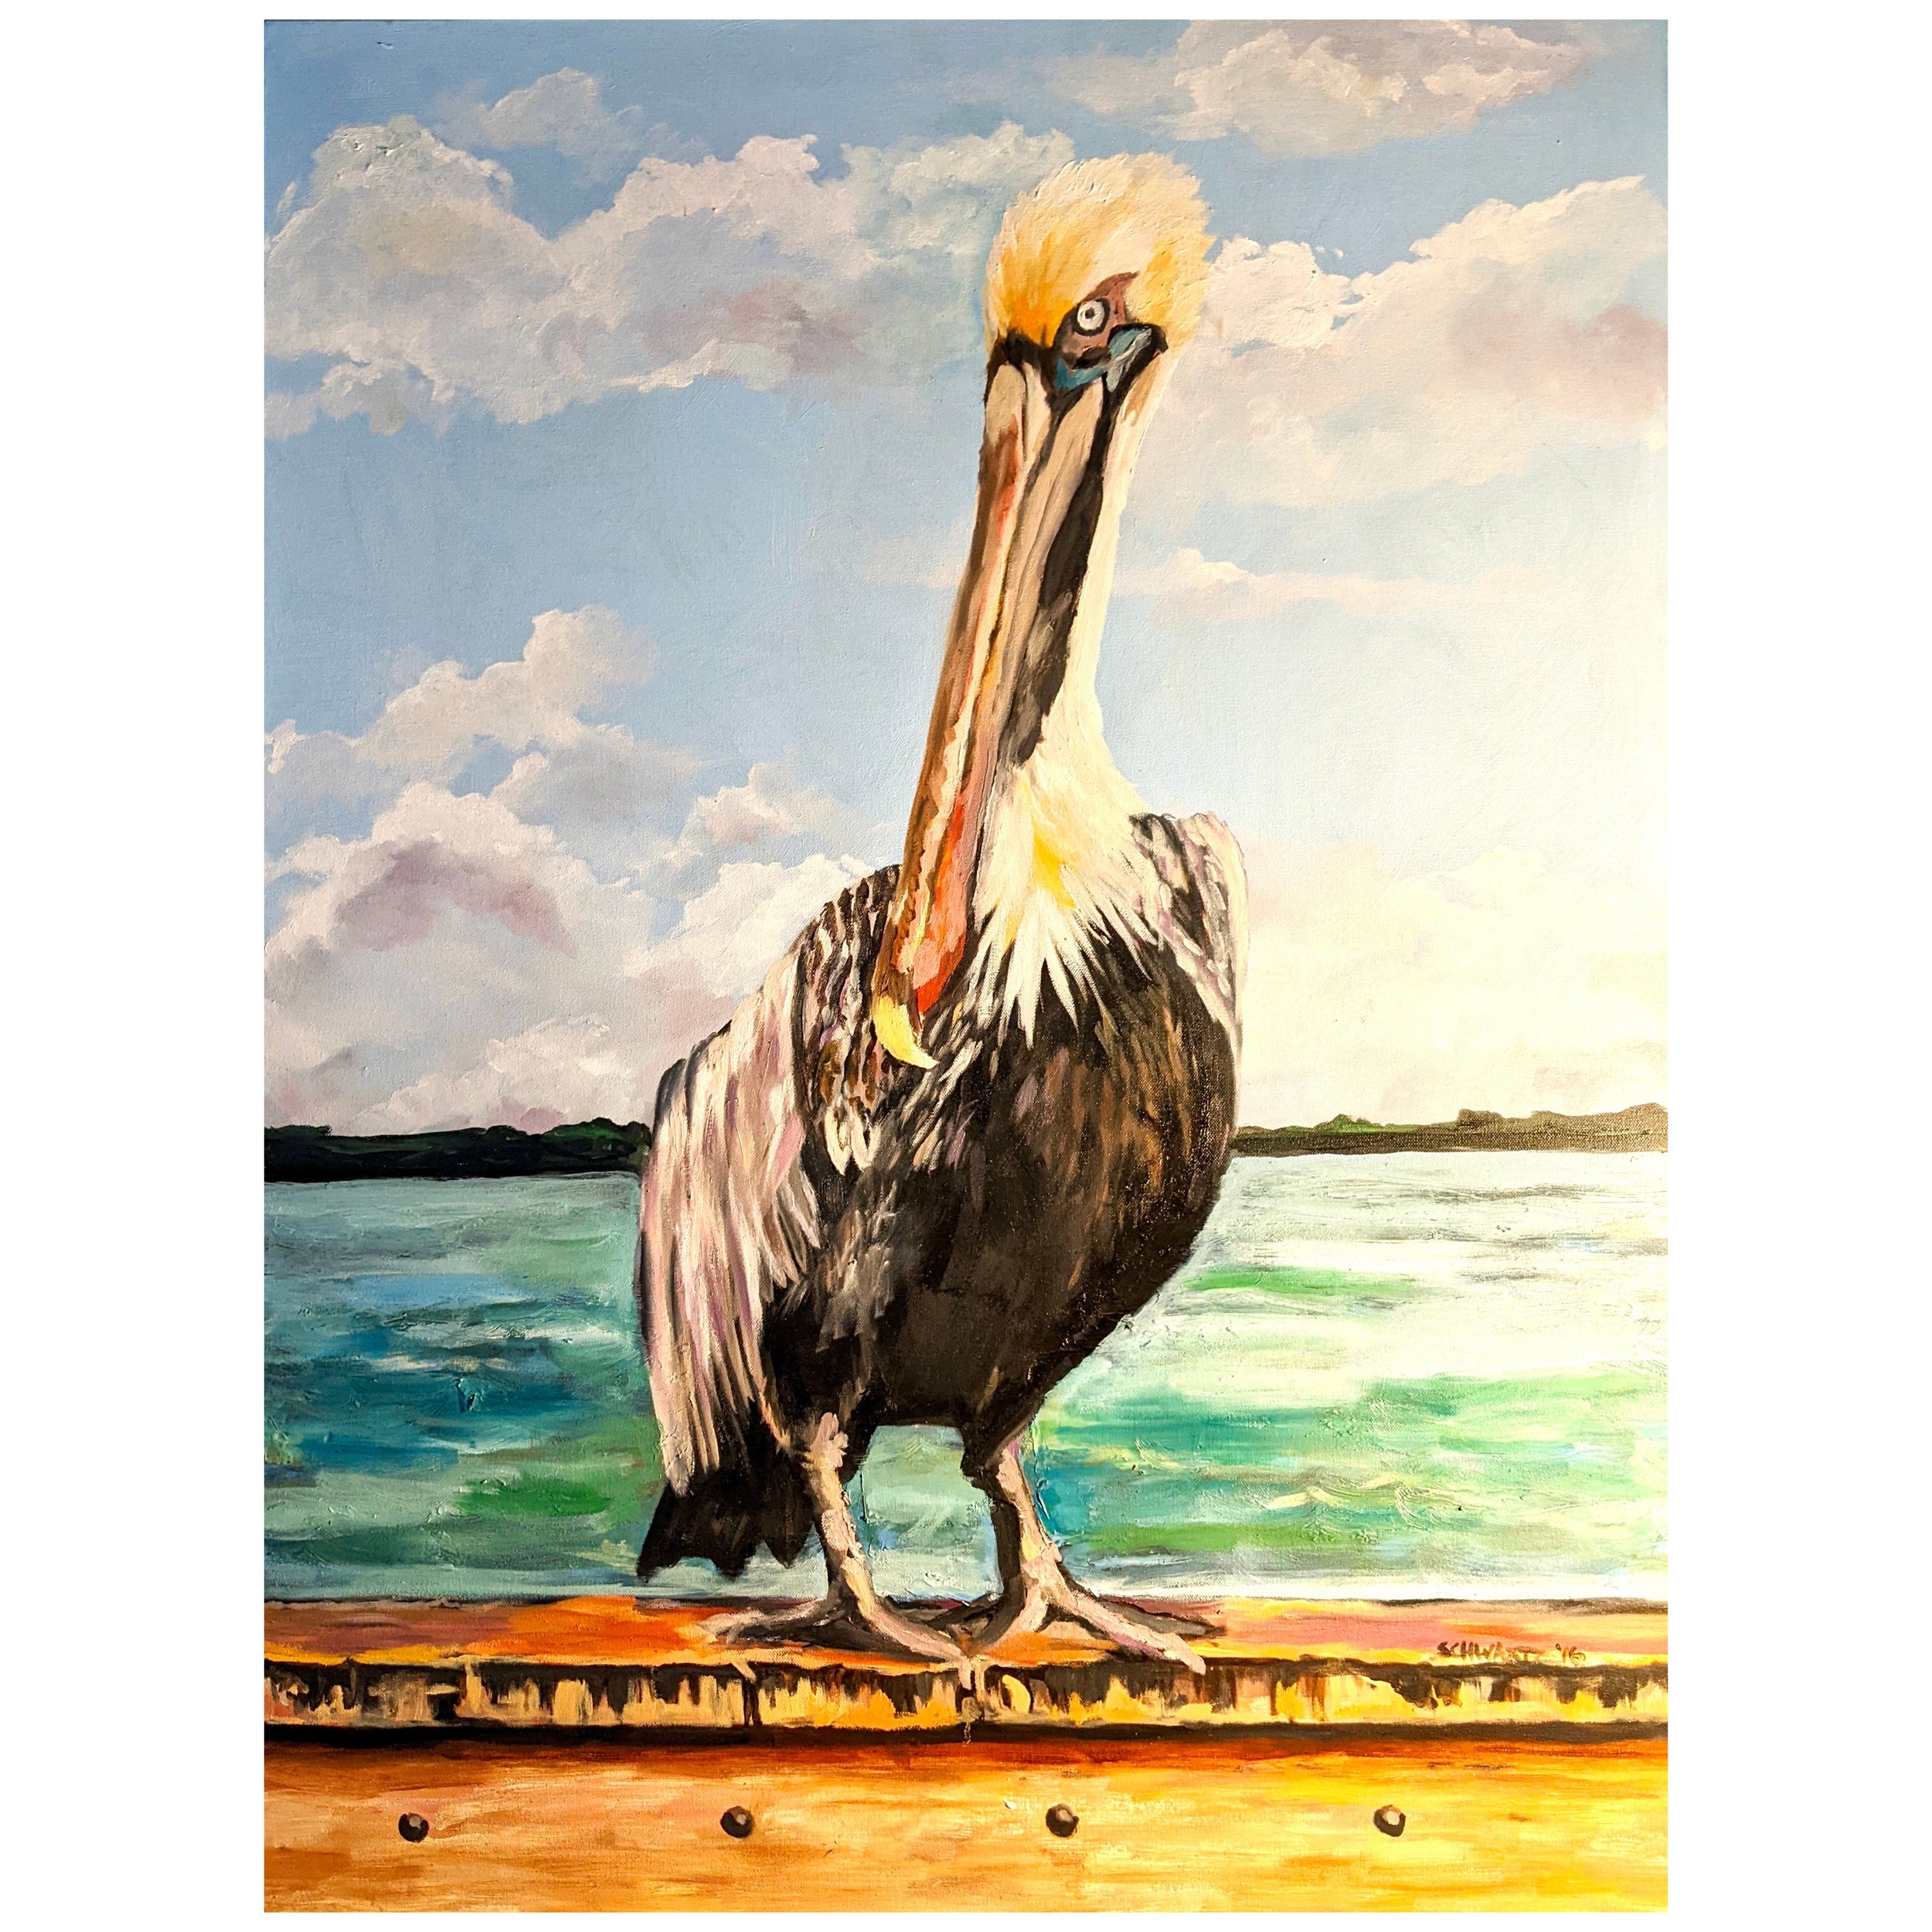 Framed Oil on Canvas "Pelican" by Susan Schwartz